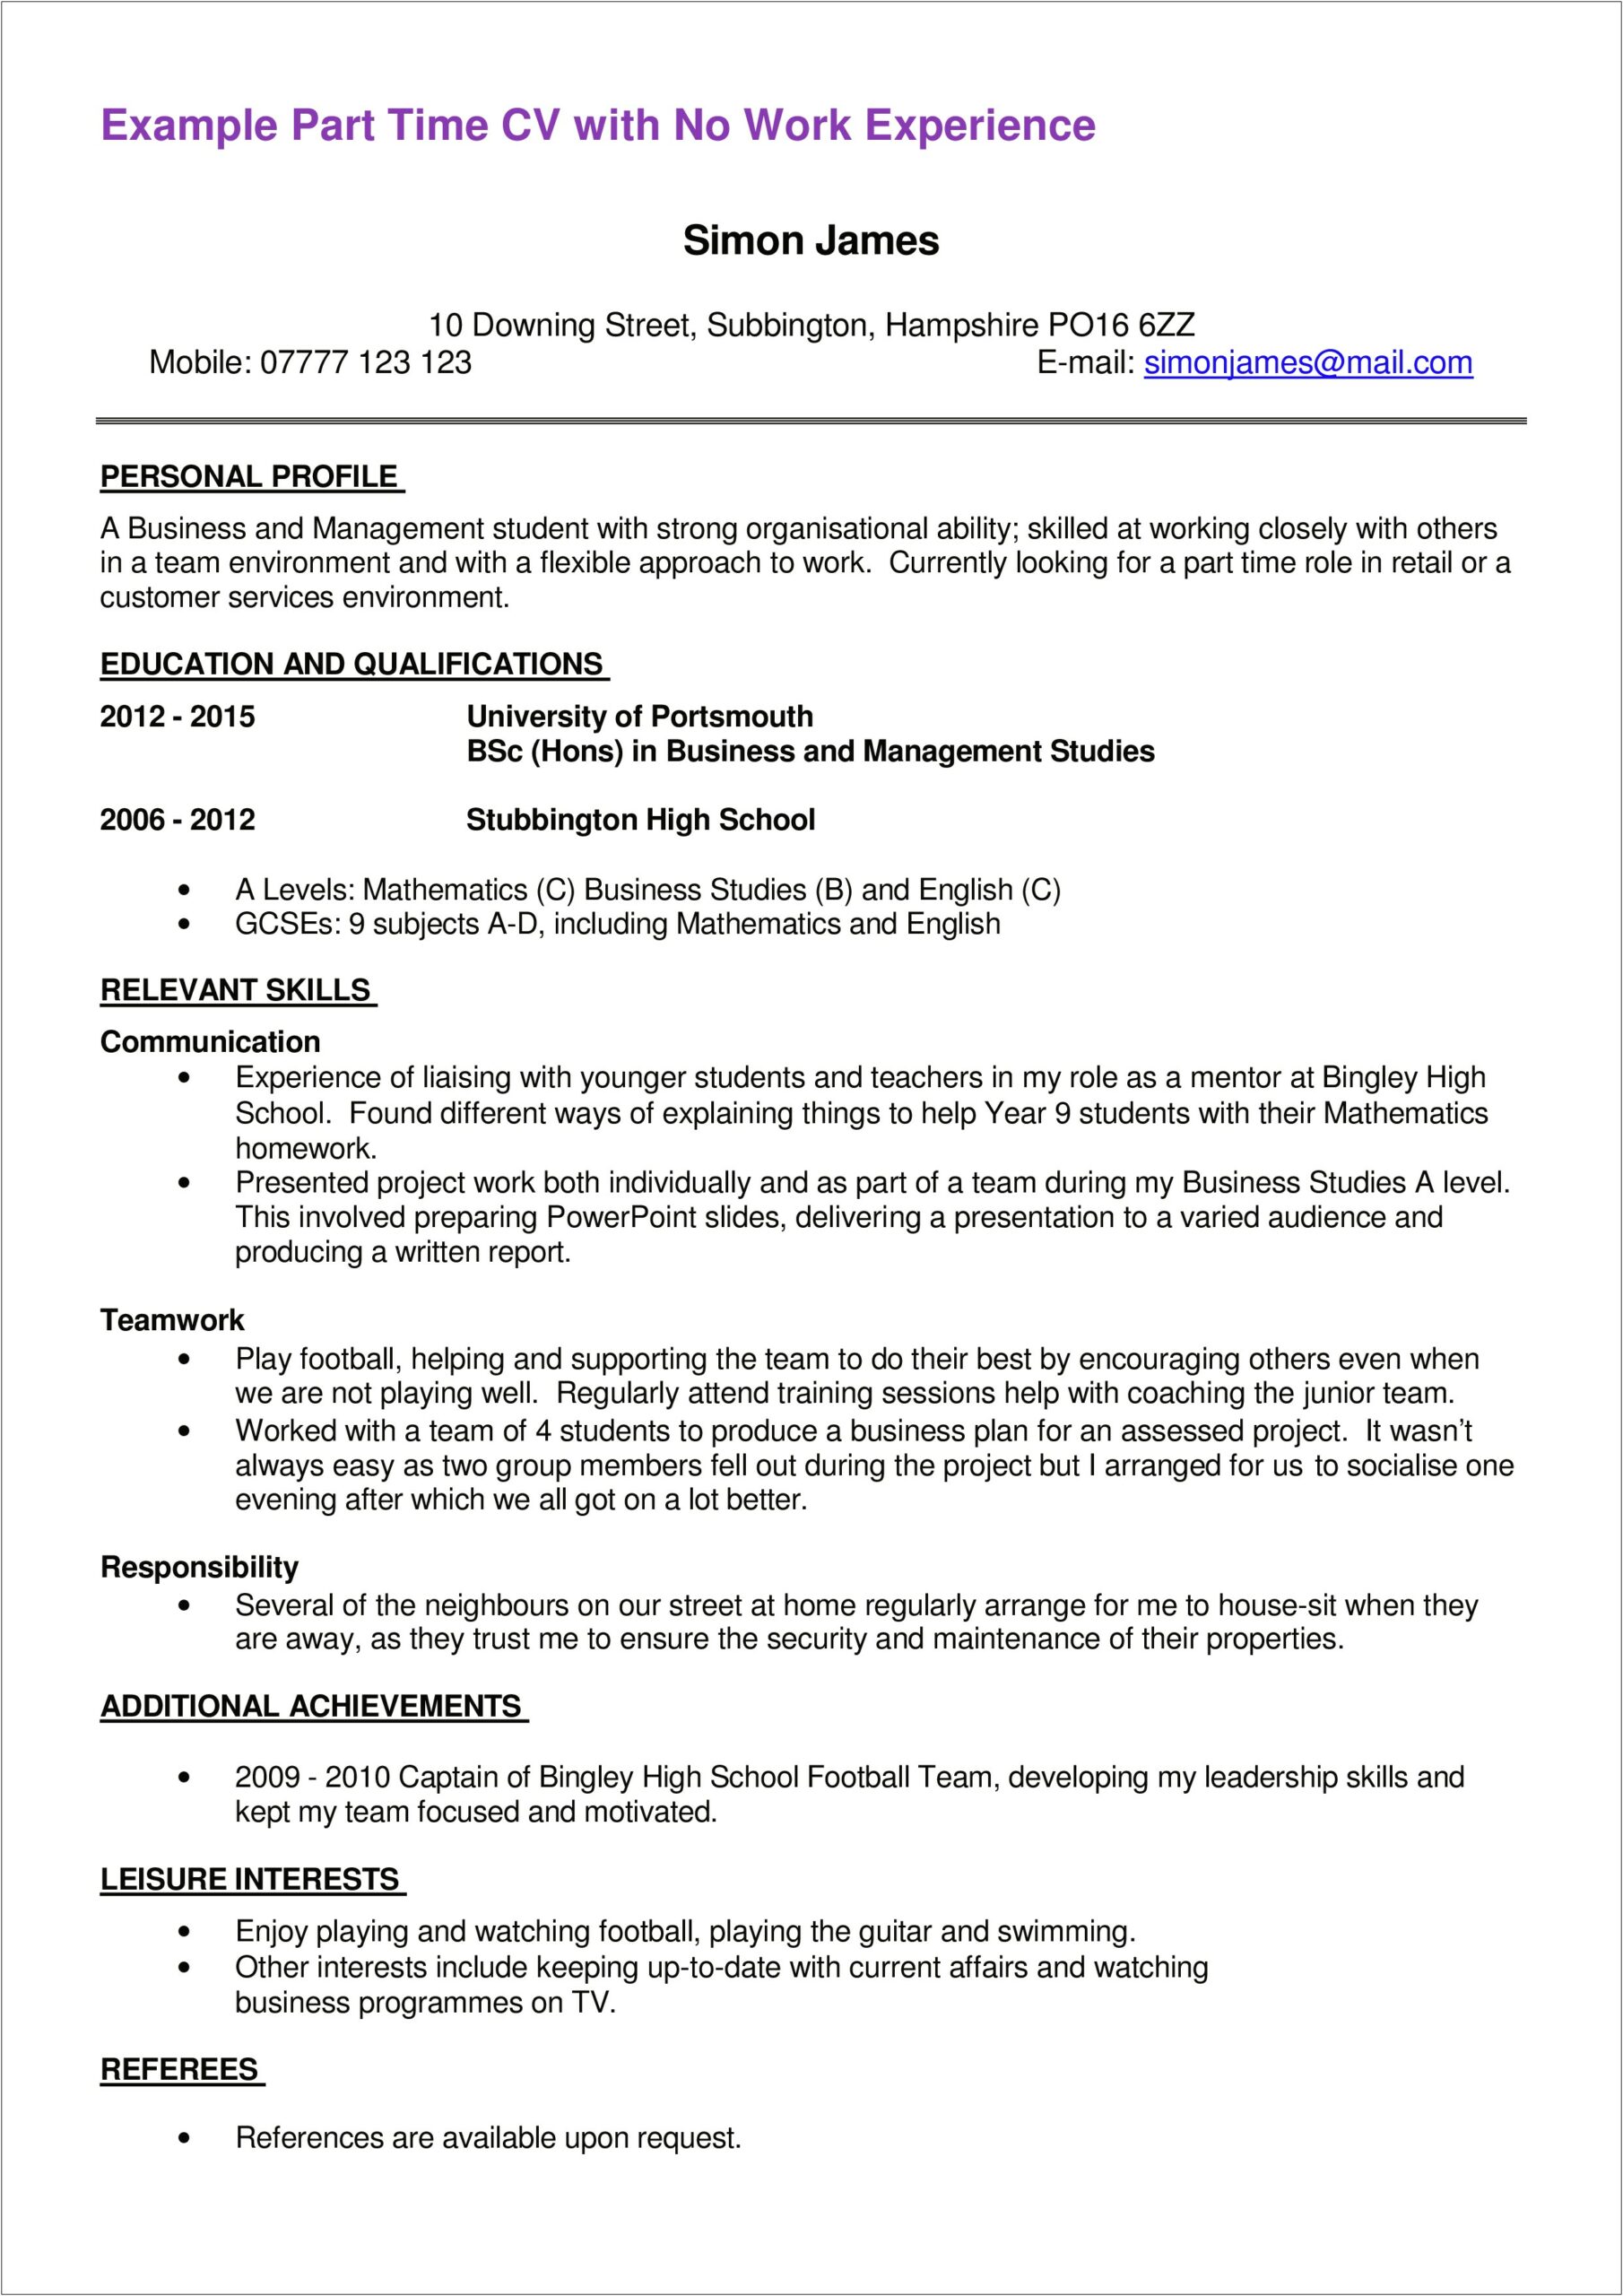 Download Format For Resume For Job